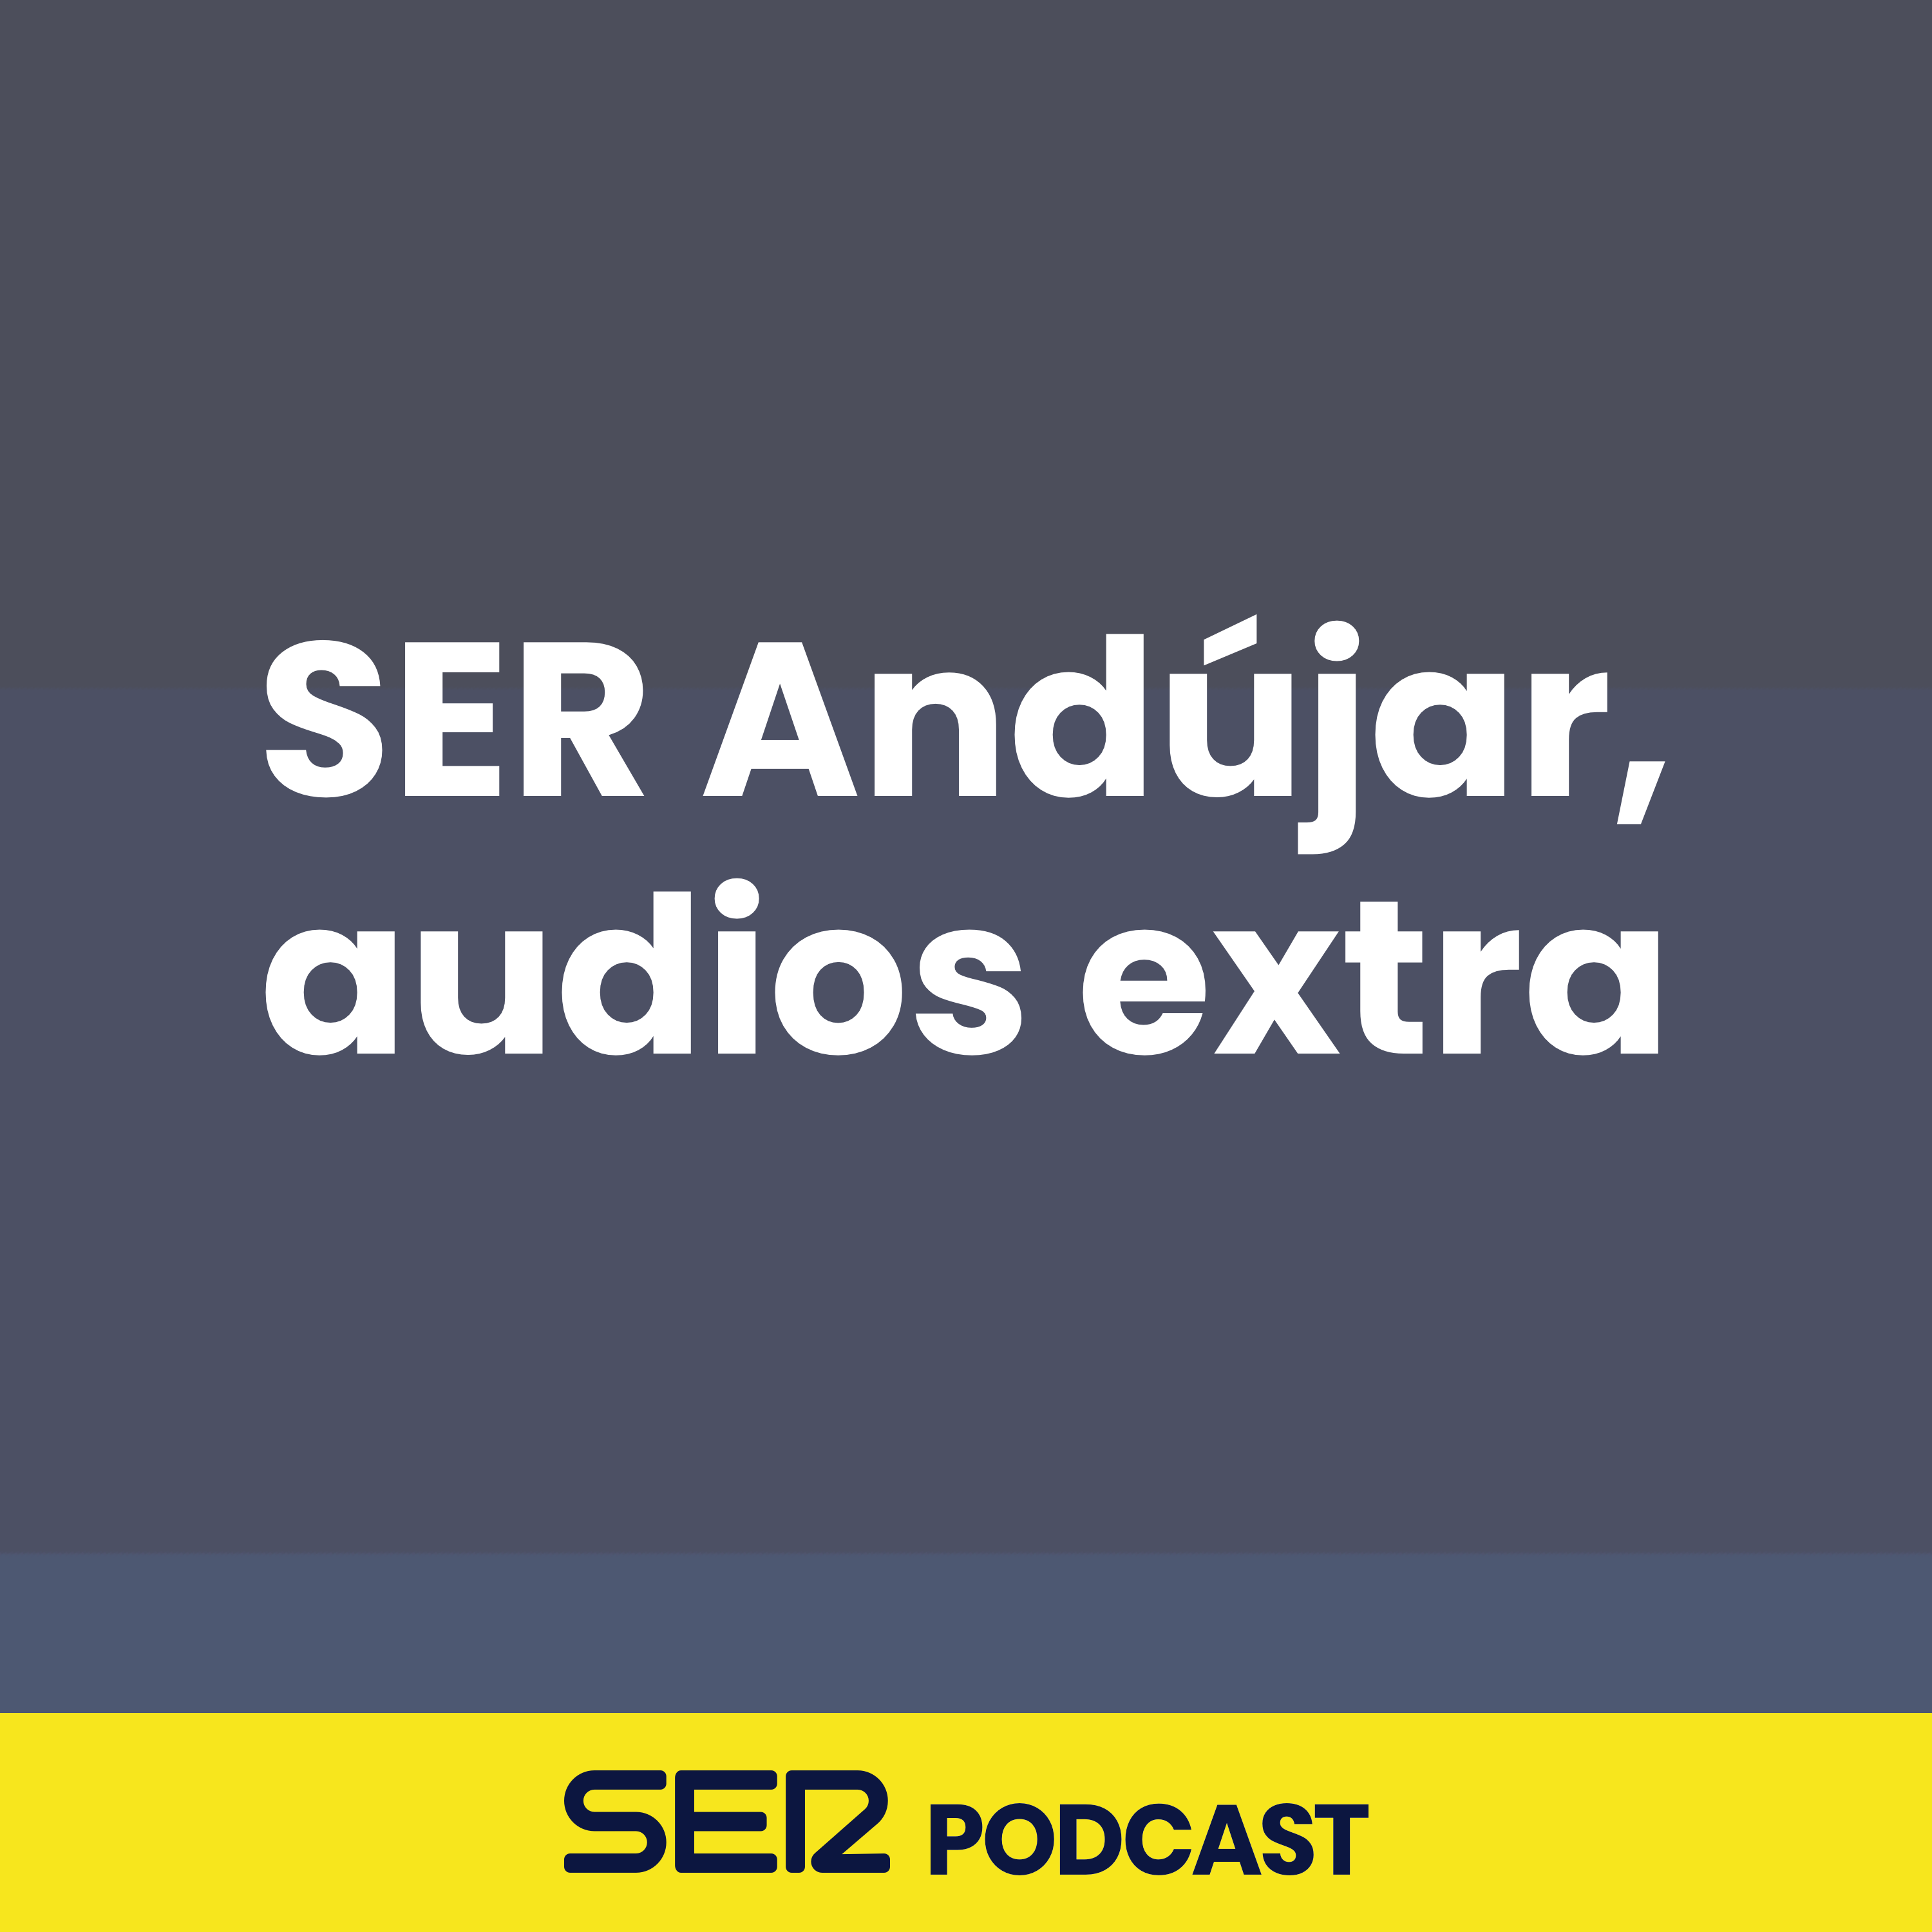 SER Andújar, audios extra